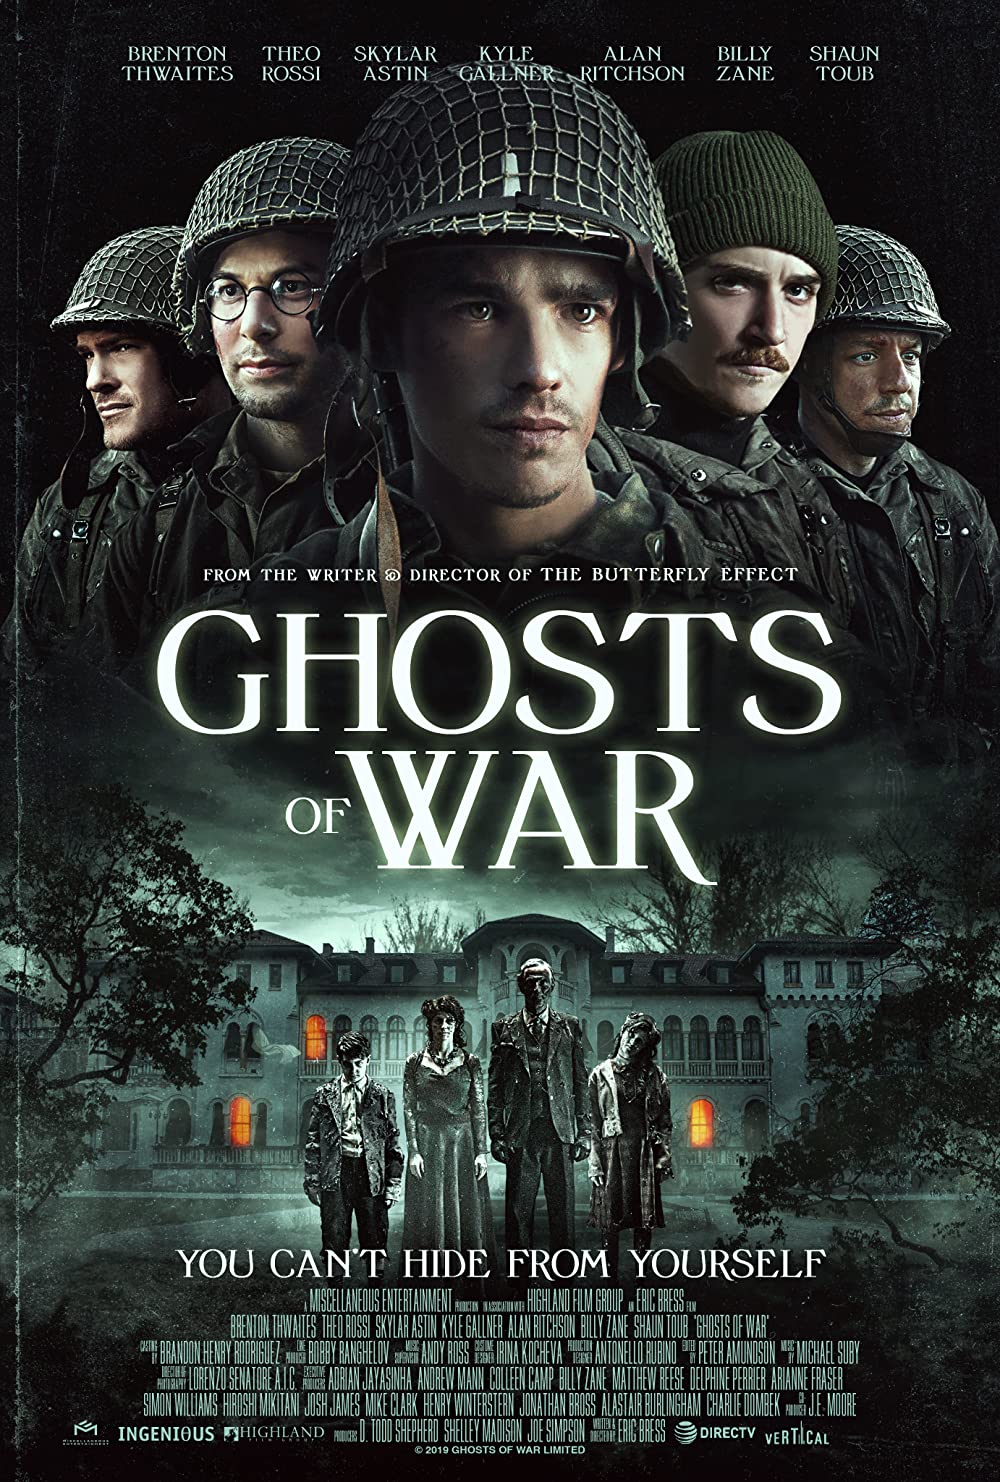 Filmbeschreibung zu Ghosts of War